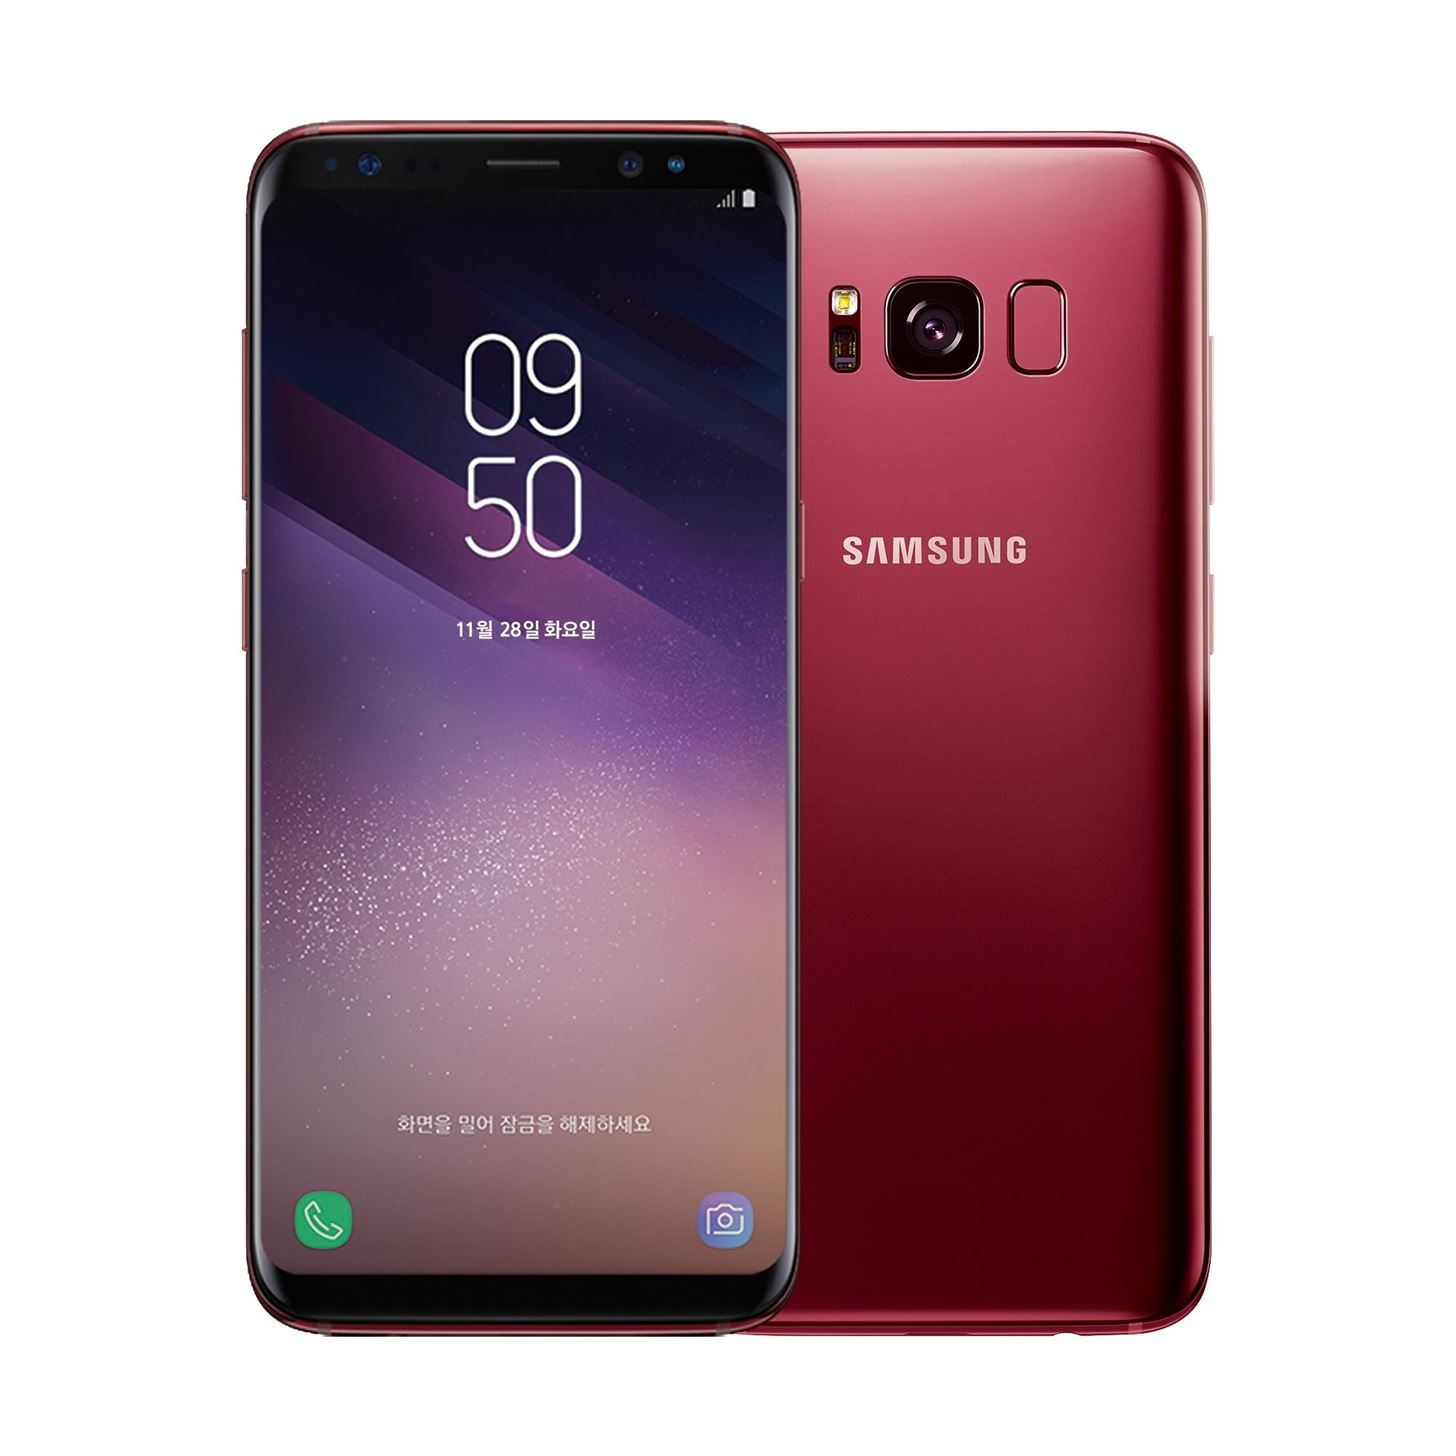 Samsung Galaxy S9 Burgundy Red Price in Pakistan Specs 